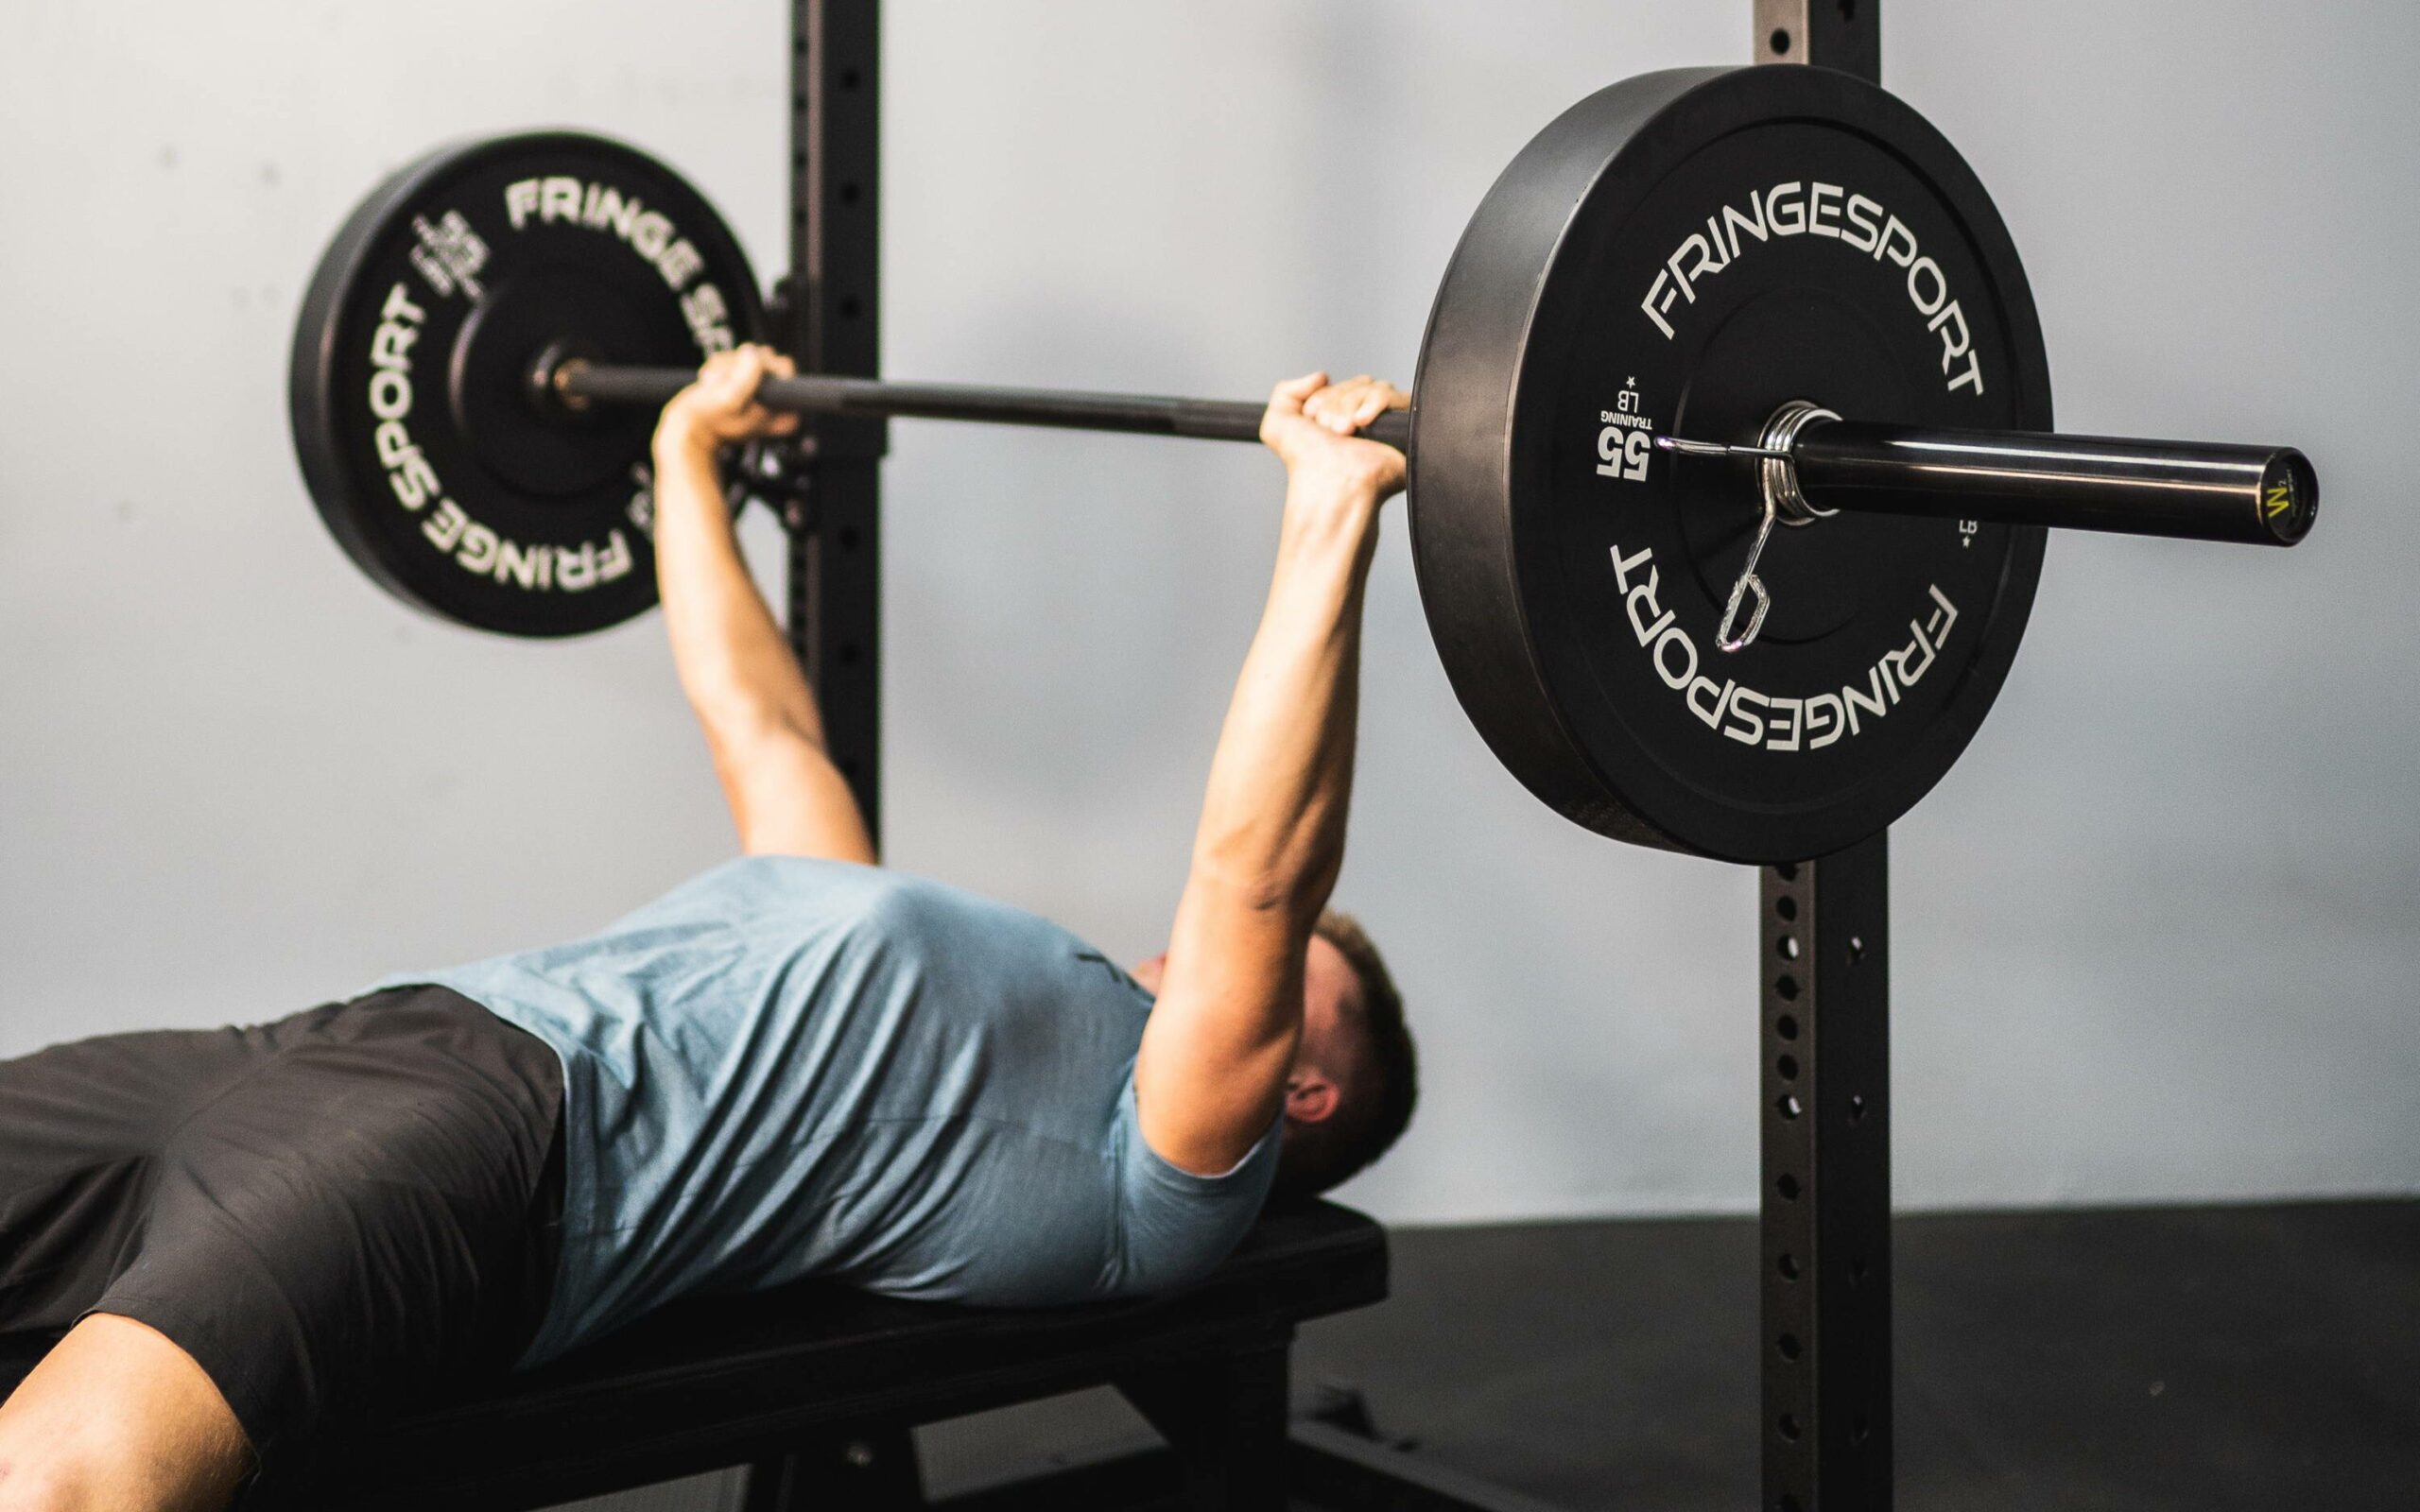 fringe sport squat rack with pull up bar